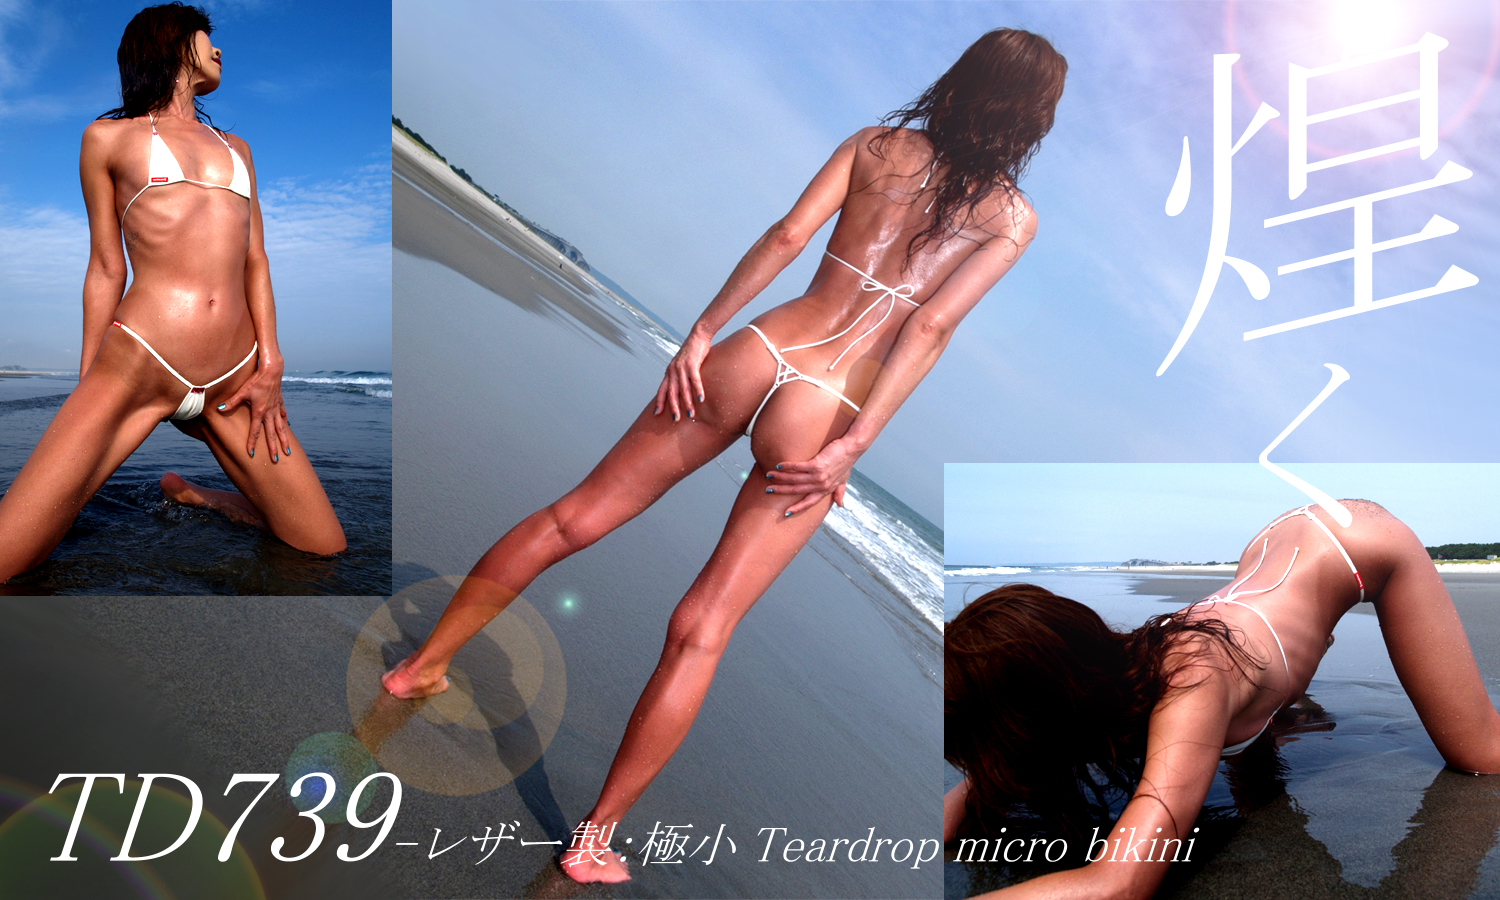 ＼TD739-秘密のビーチで楽しむ！アクアドレス・極小スーパーマイクロビキニ／-TD739-最高級マイクロビキニを aquadress teardrop super micro  bikini. 